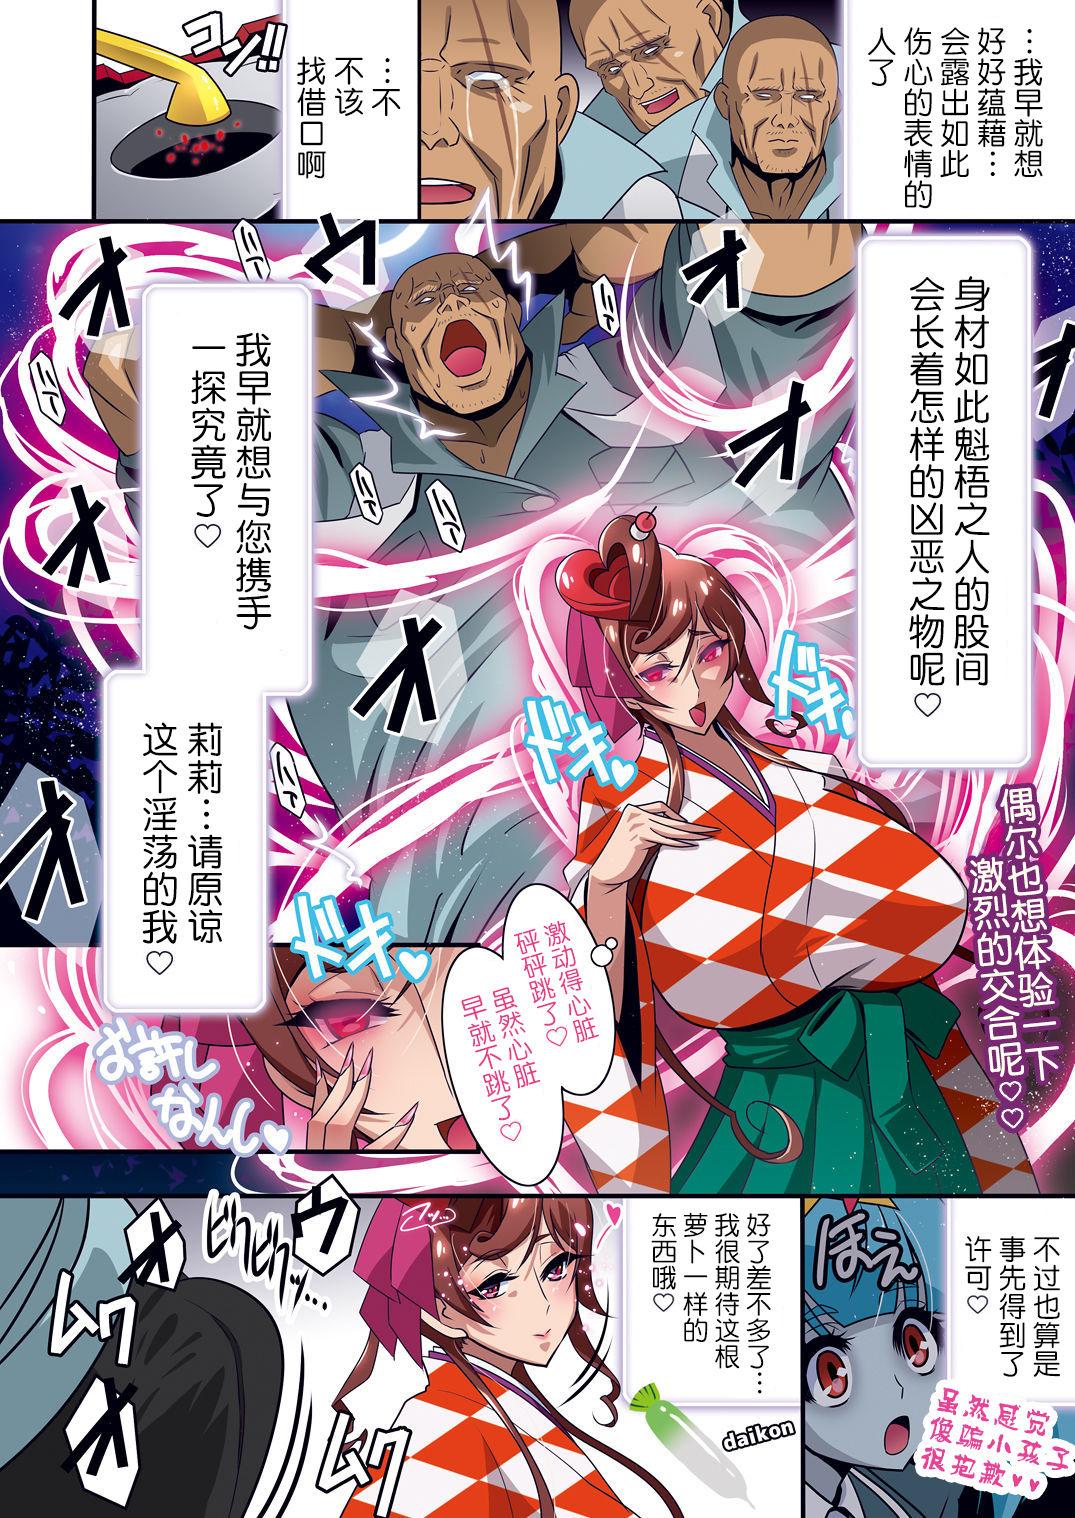 Spreading Nee-san vs Chougokubuto Yuugiri Tai Takeo Gekka no Koubousen - Zombie land saga Sis - Page 7